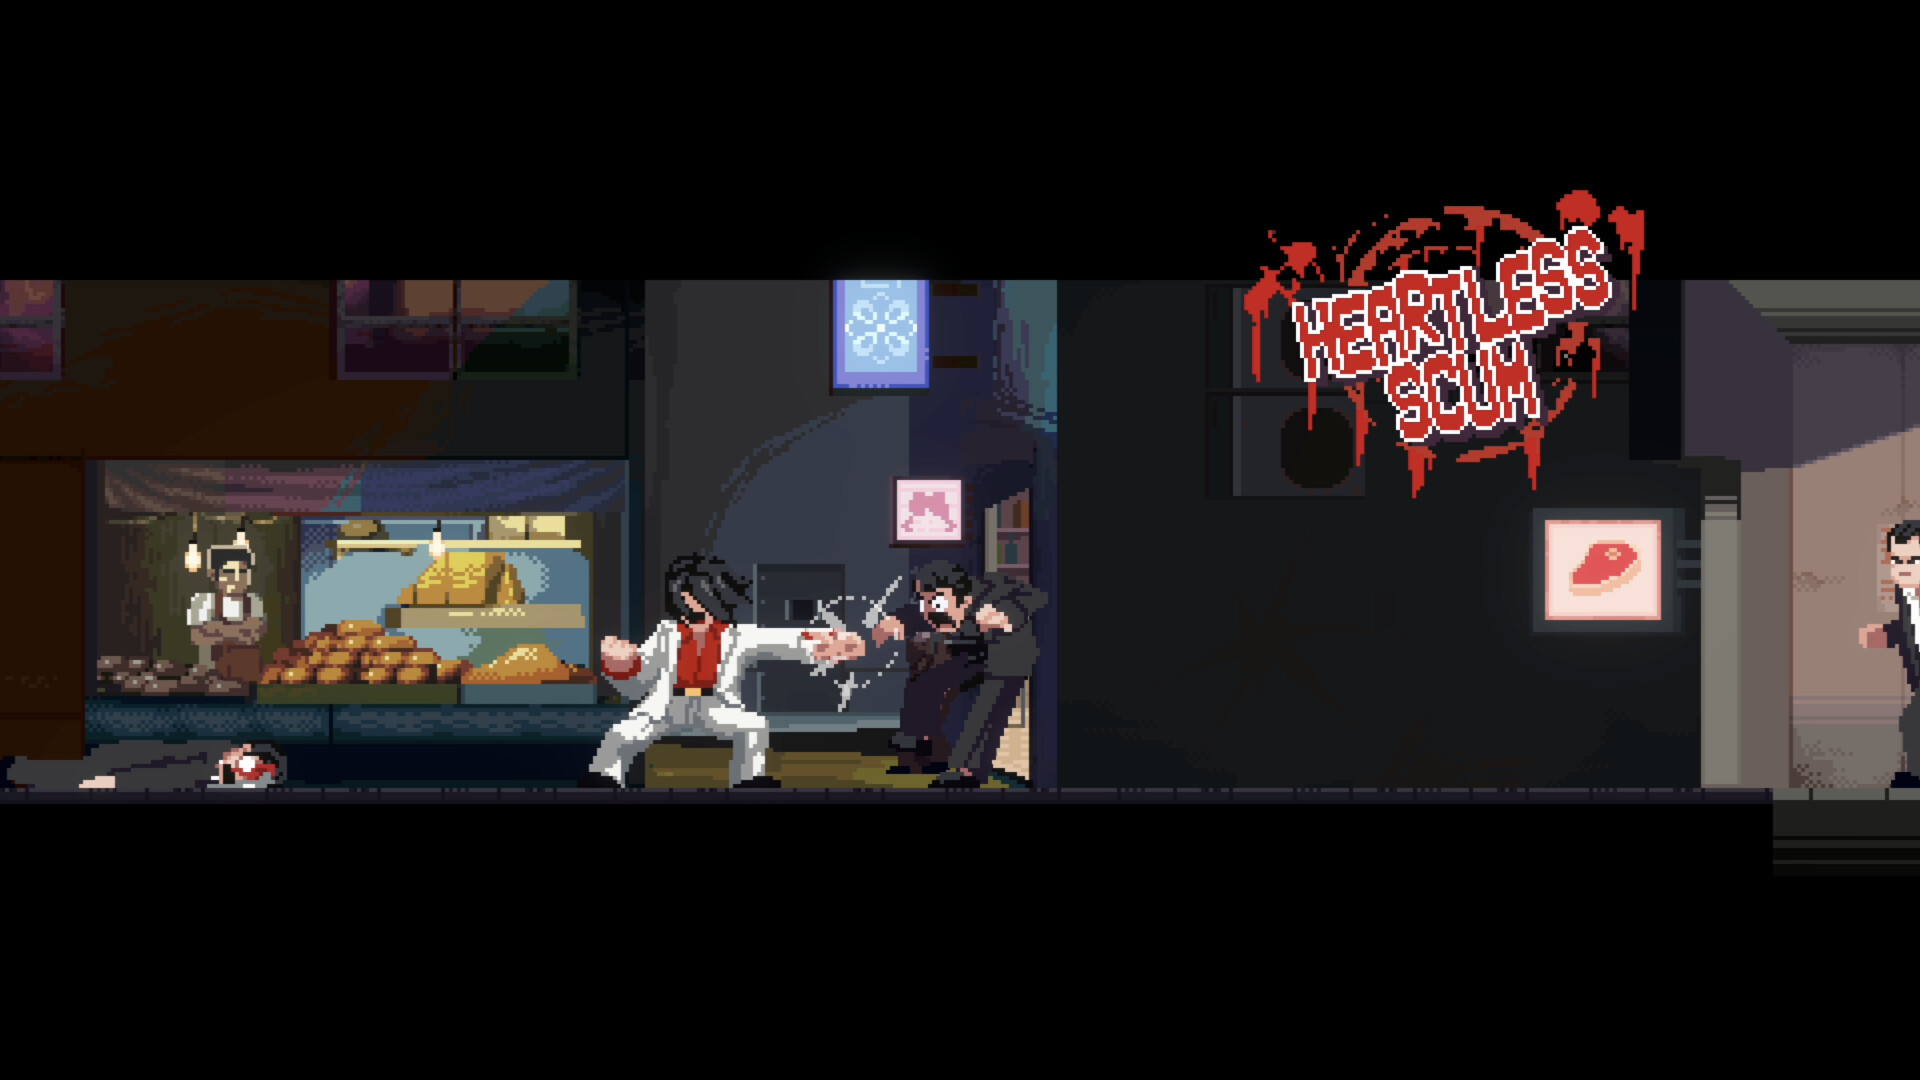 Vengeance of Mr. Peppermint - Official Trailer  Publisher Spotlights  Showcase 2023 (Freedom Games) - IGN